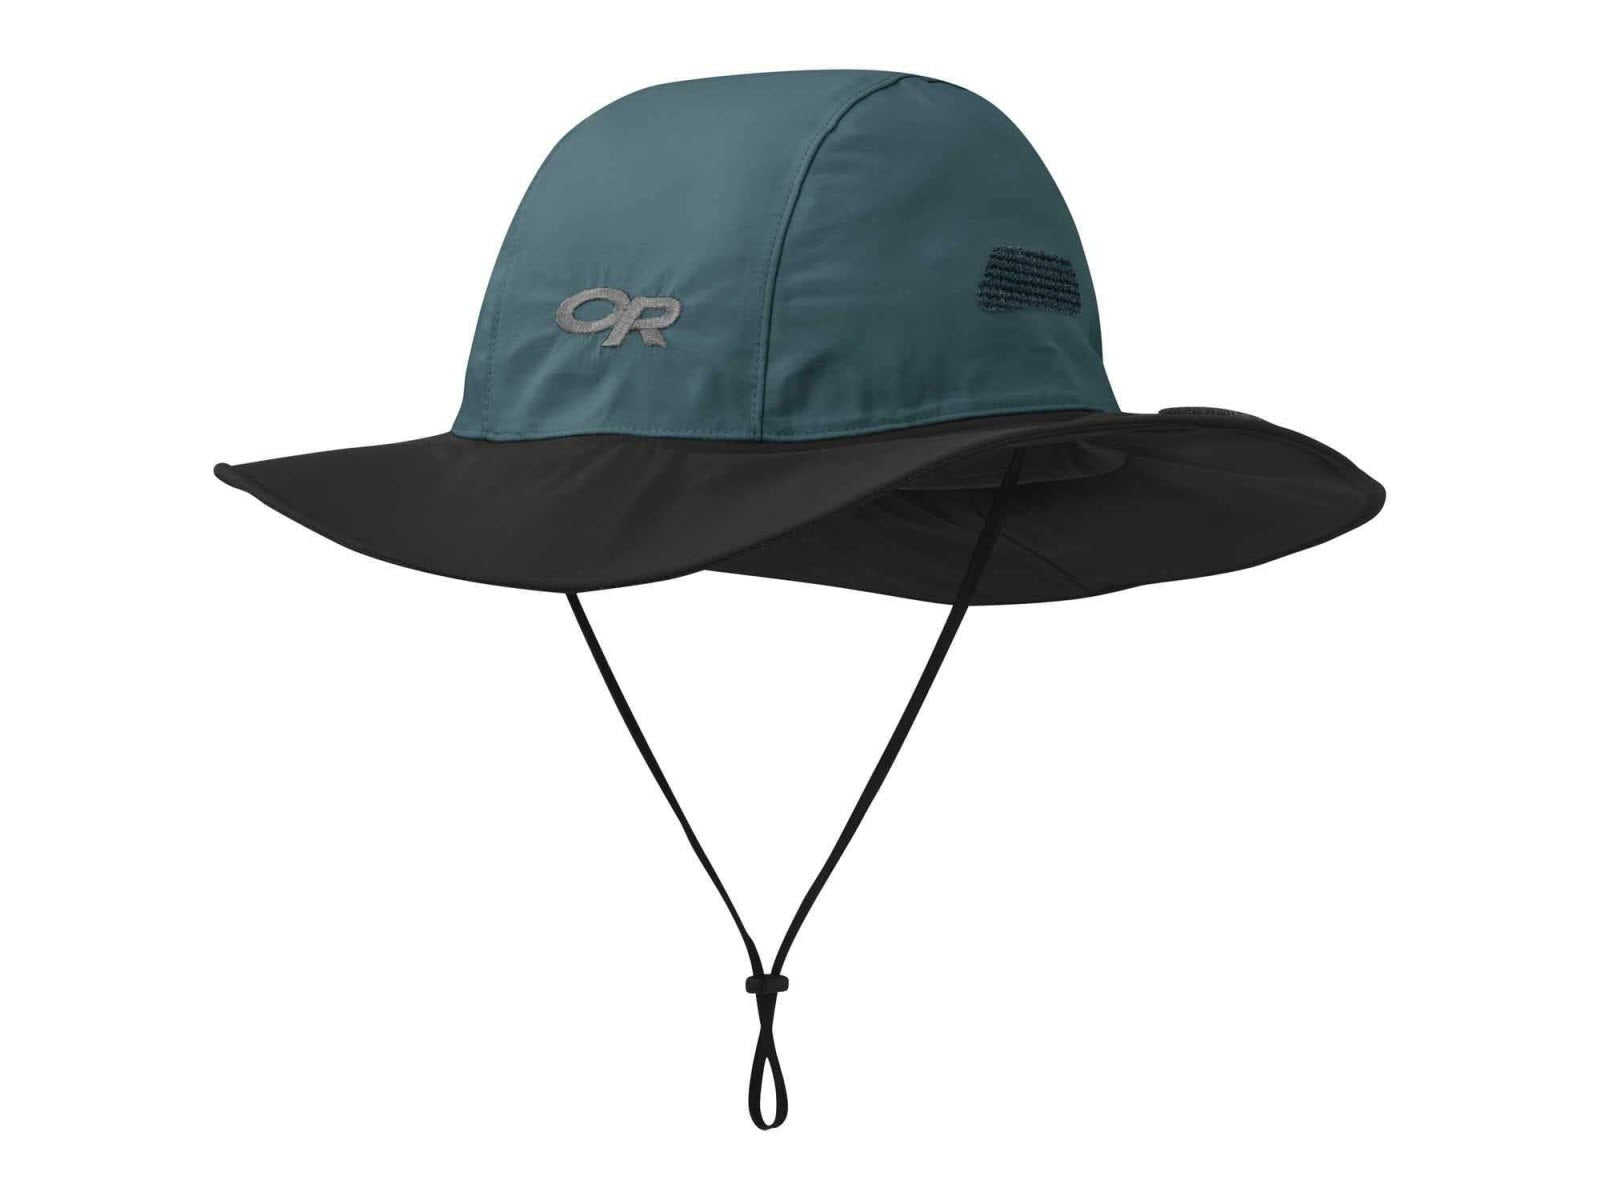 Outdoor Research Seattle Sombrero Rain Hat in Mediterranean Blue